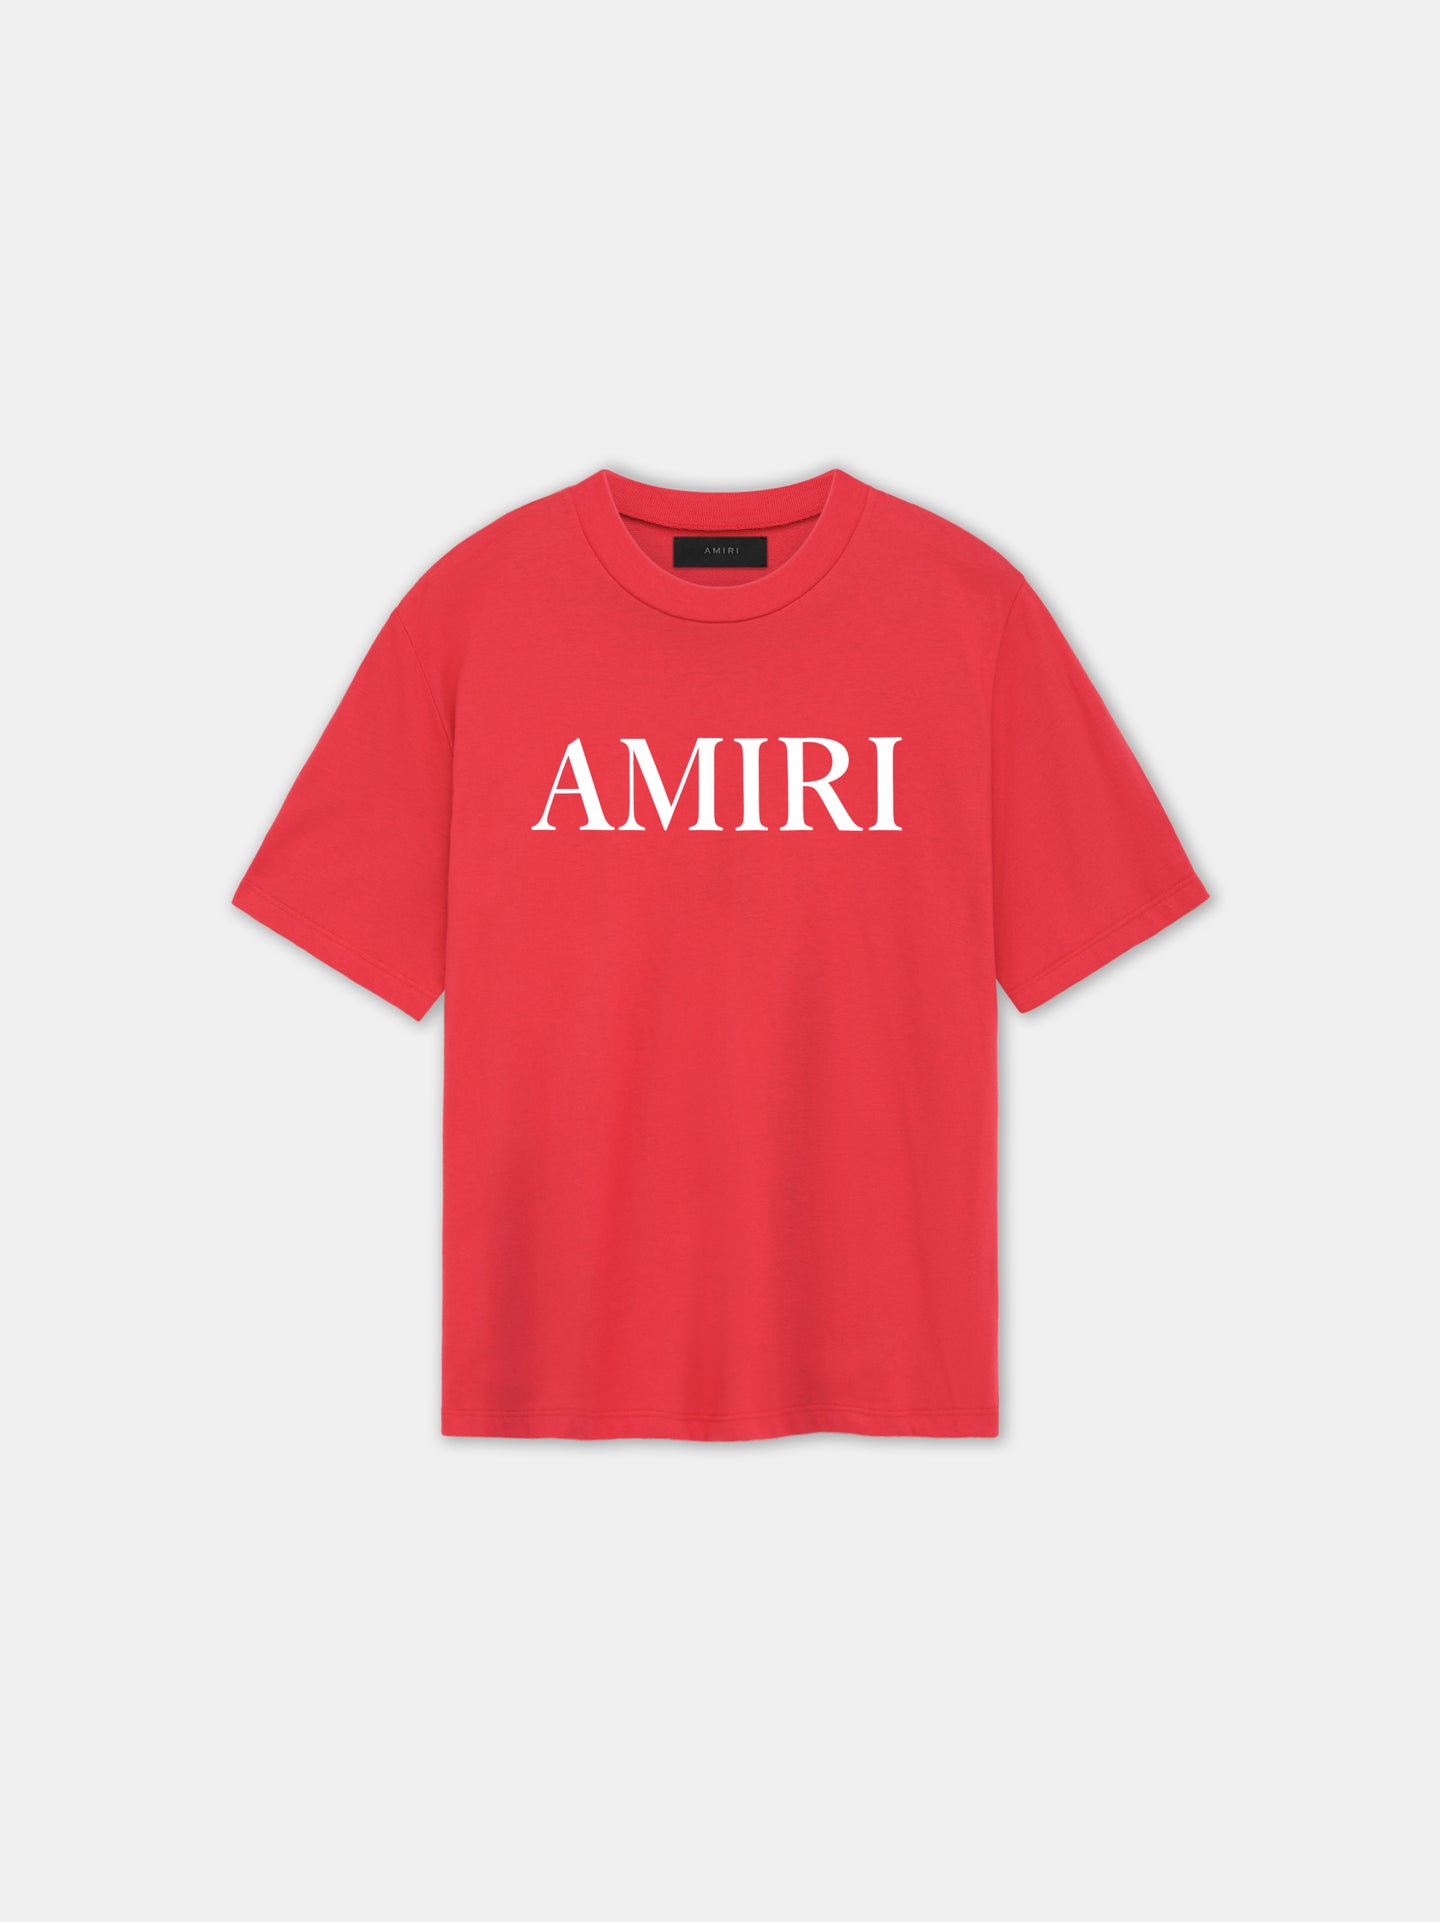 AMIRI CORE LOGO TEE - Red